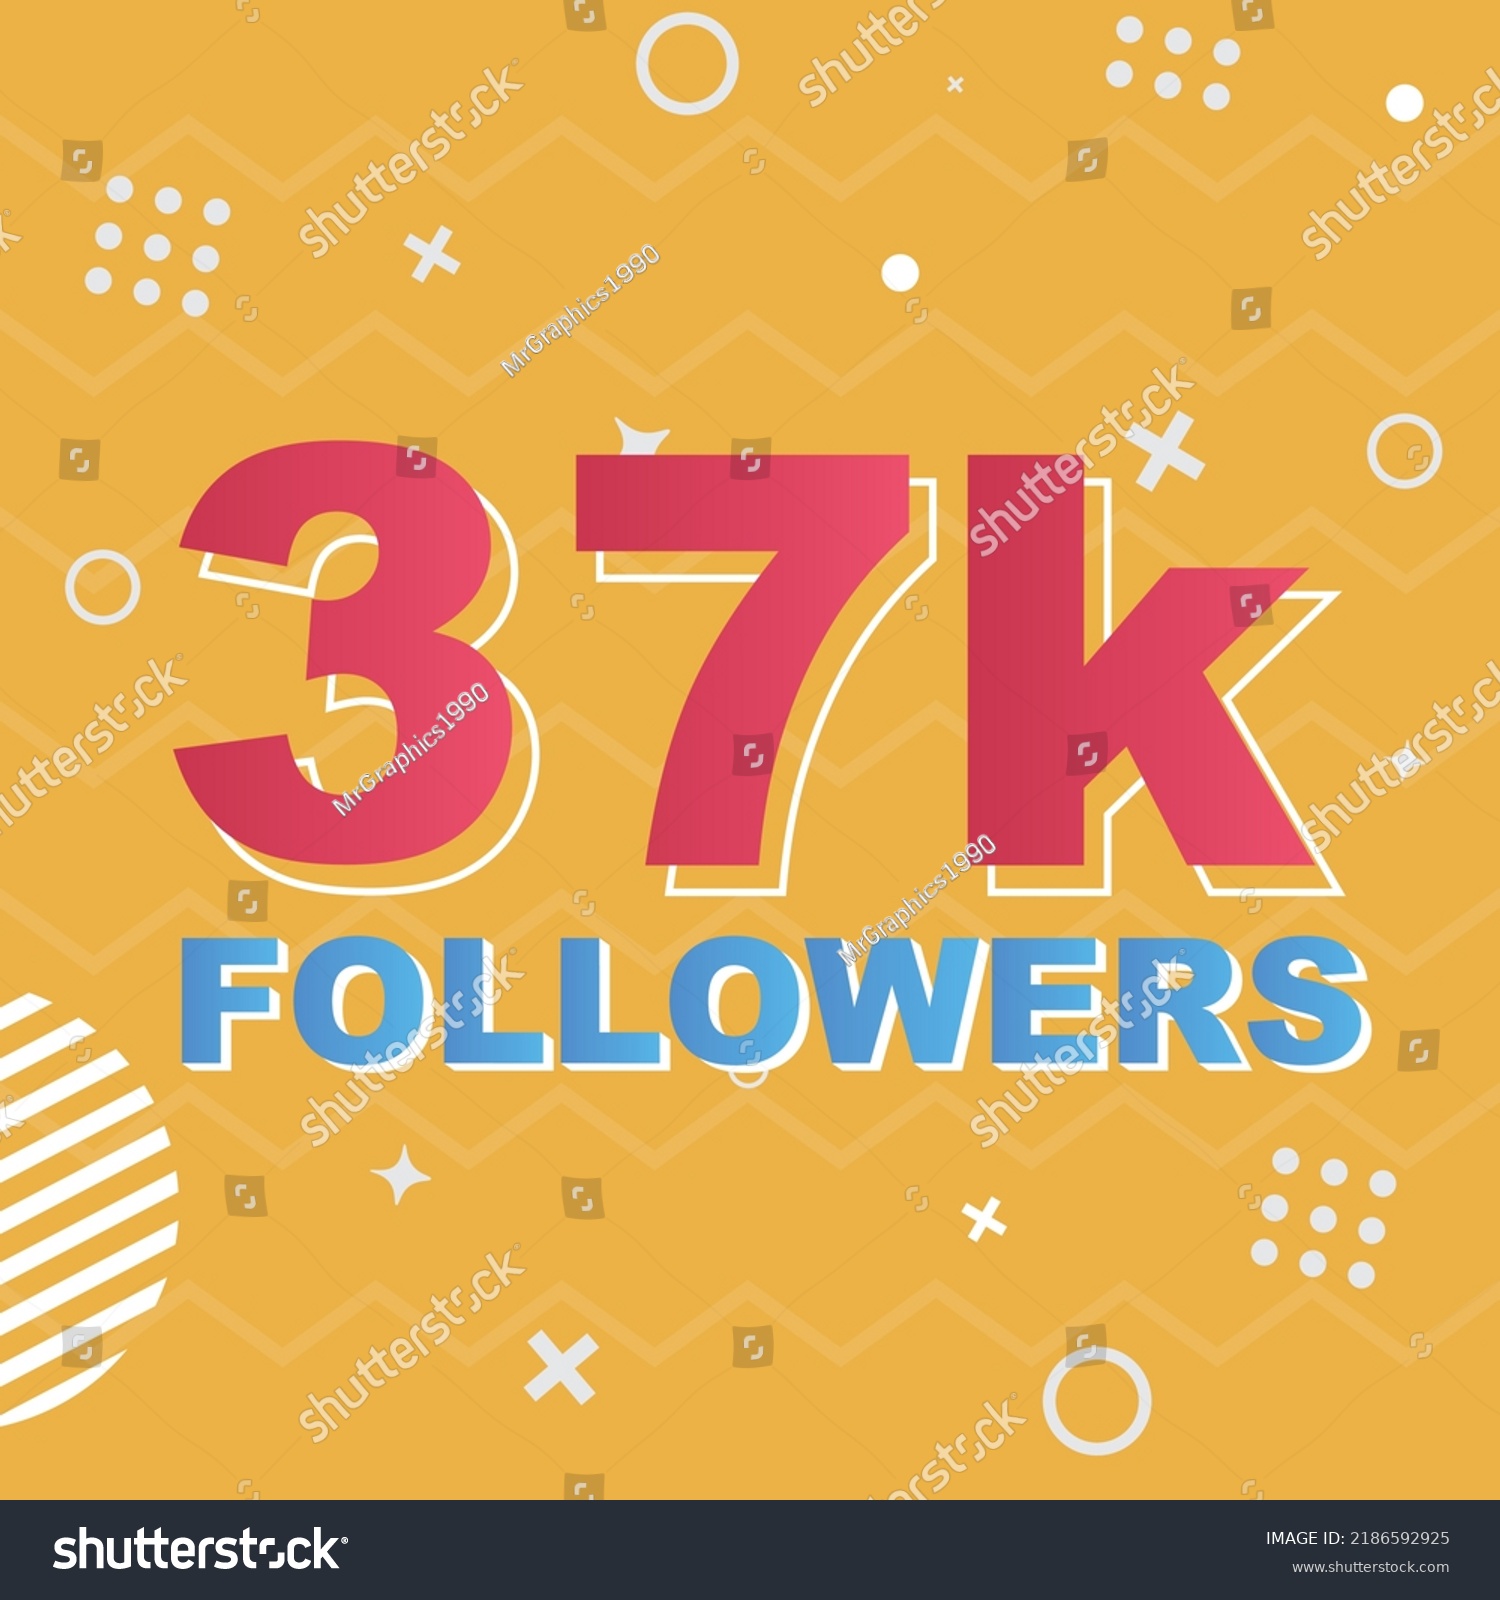 SVG of 37k Followers Card Celebration Vector. 37000 Followers Congratulation Post Social Media Template. Modern colourful design. svg